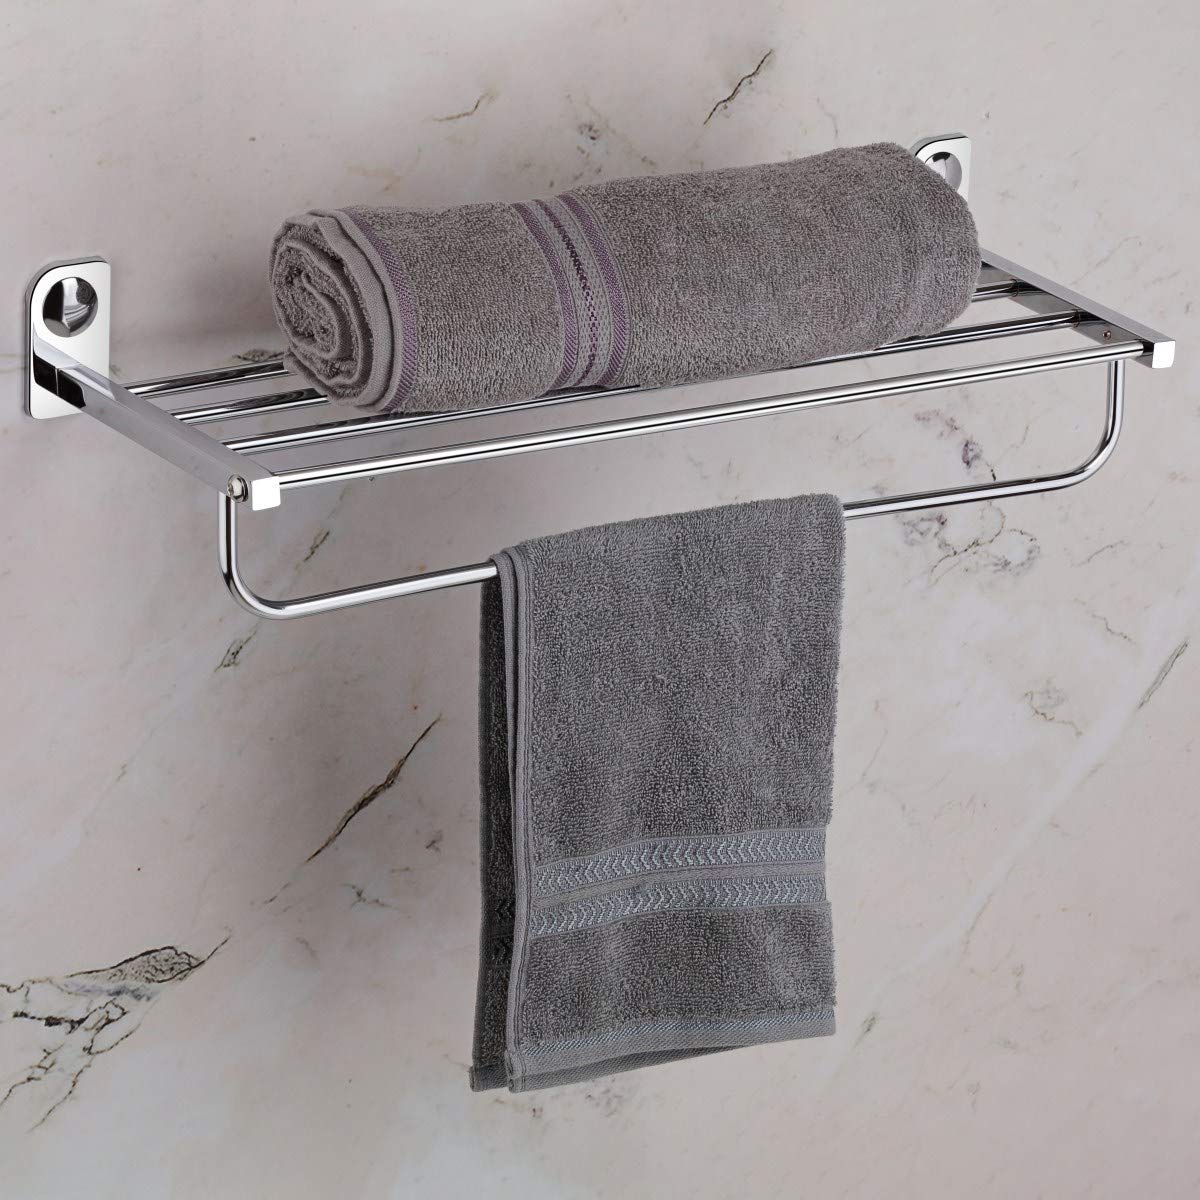 Plantex Dream Stainless Steel Towel Rack for Bathroom/Towel Stand/Towel Hanger/Bathroom Accessories (24 Inch-Chrome) - Pack of 3